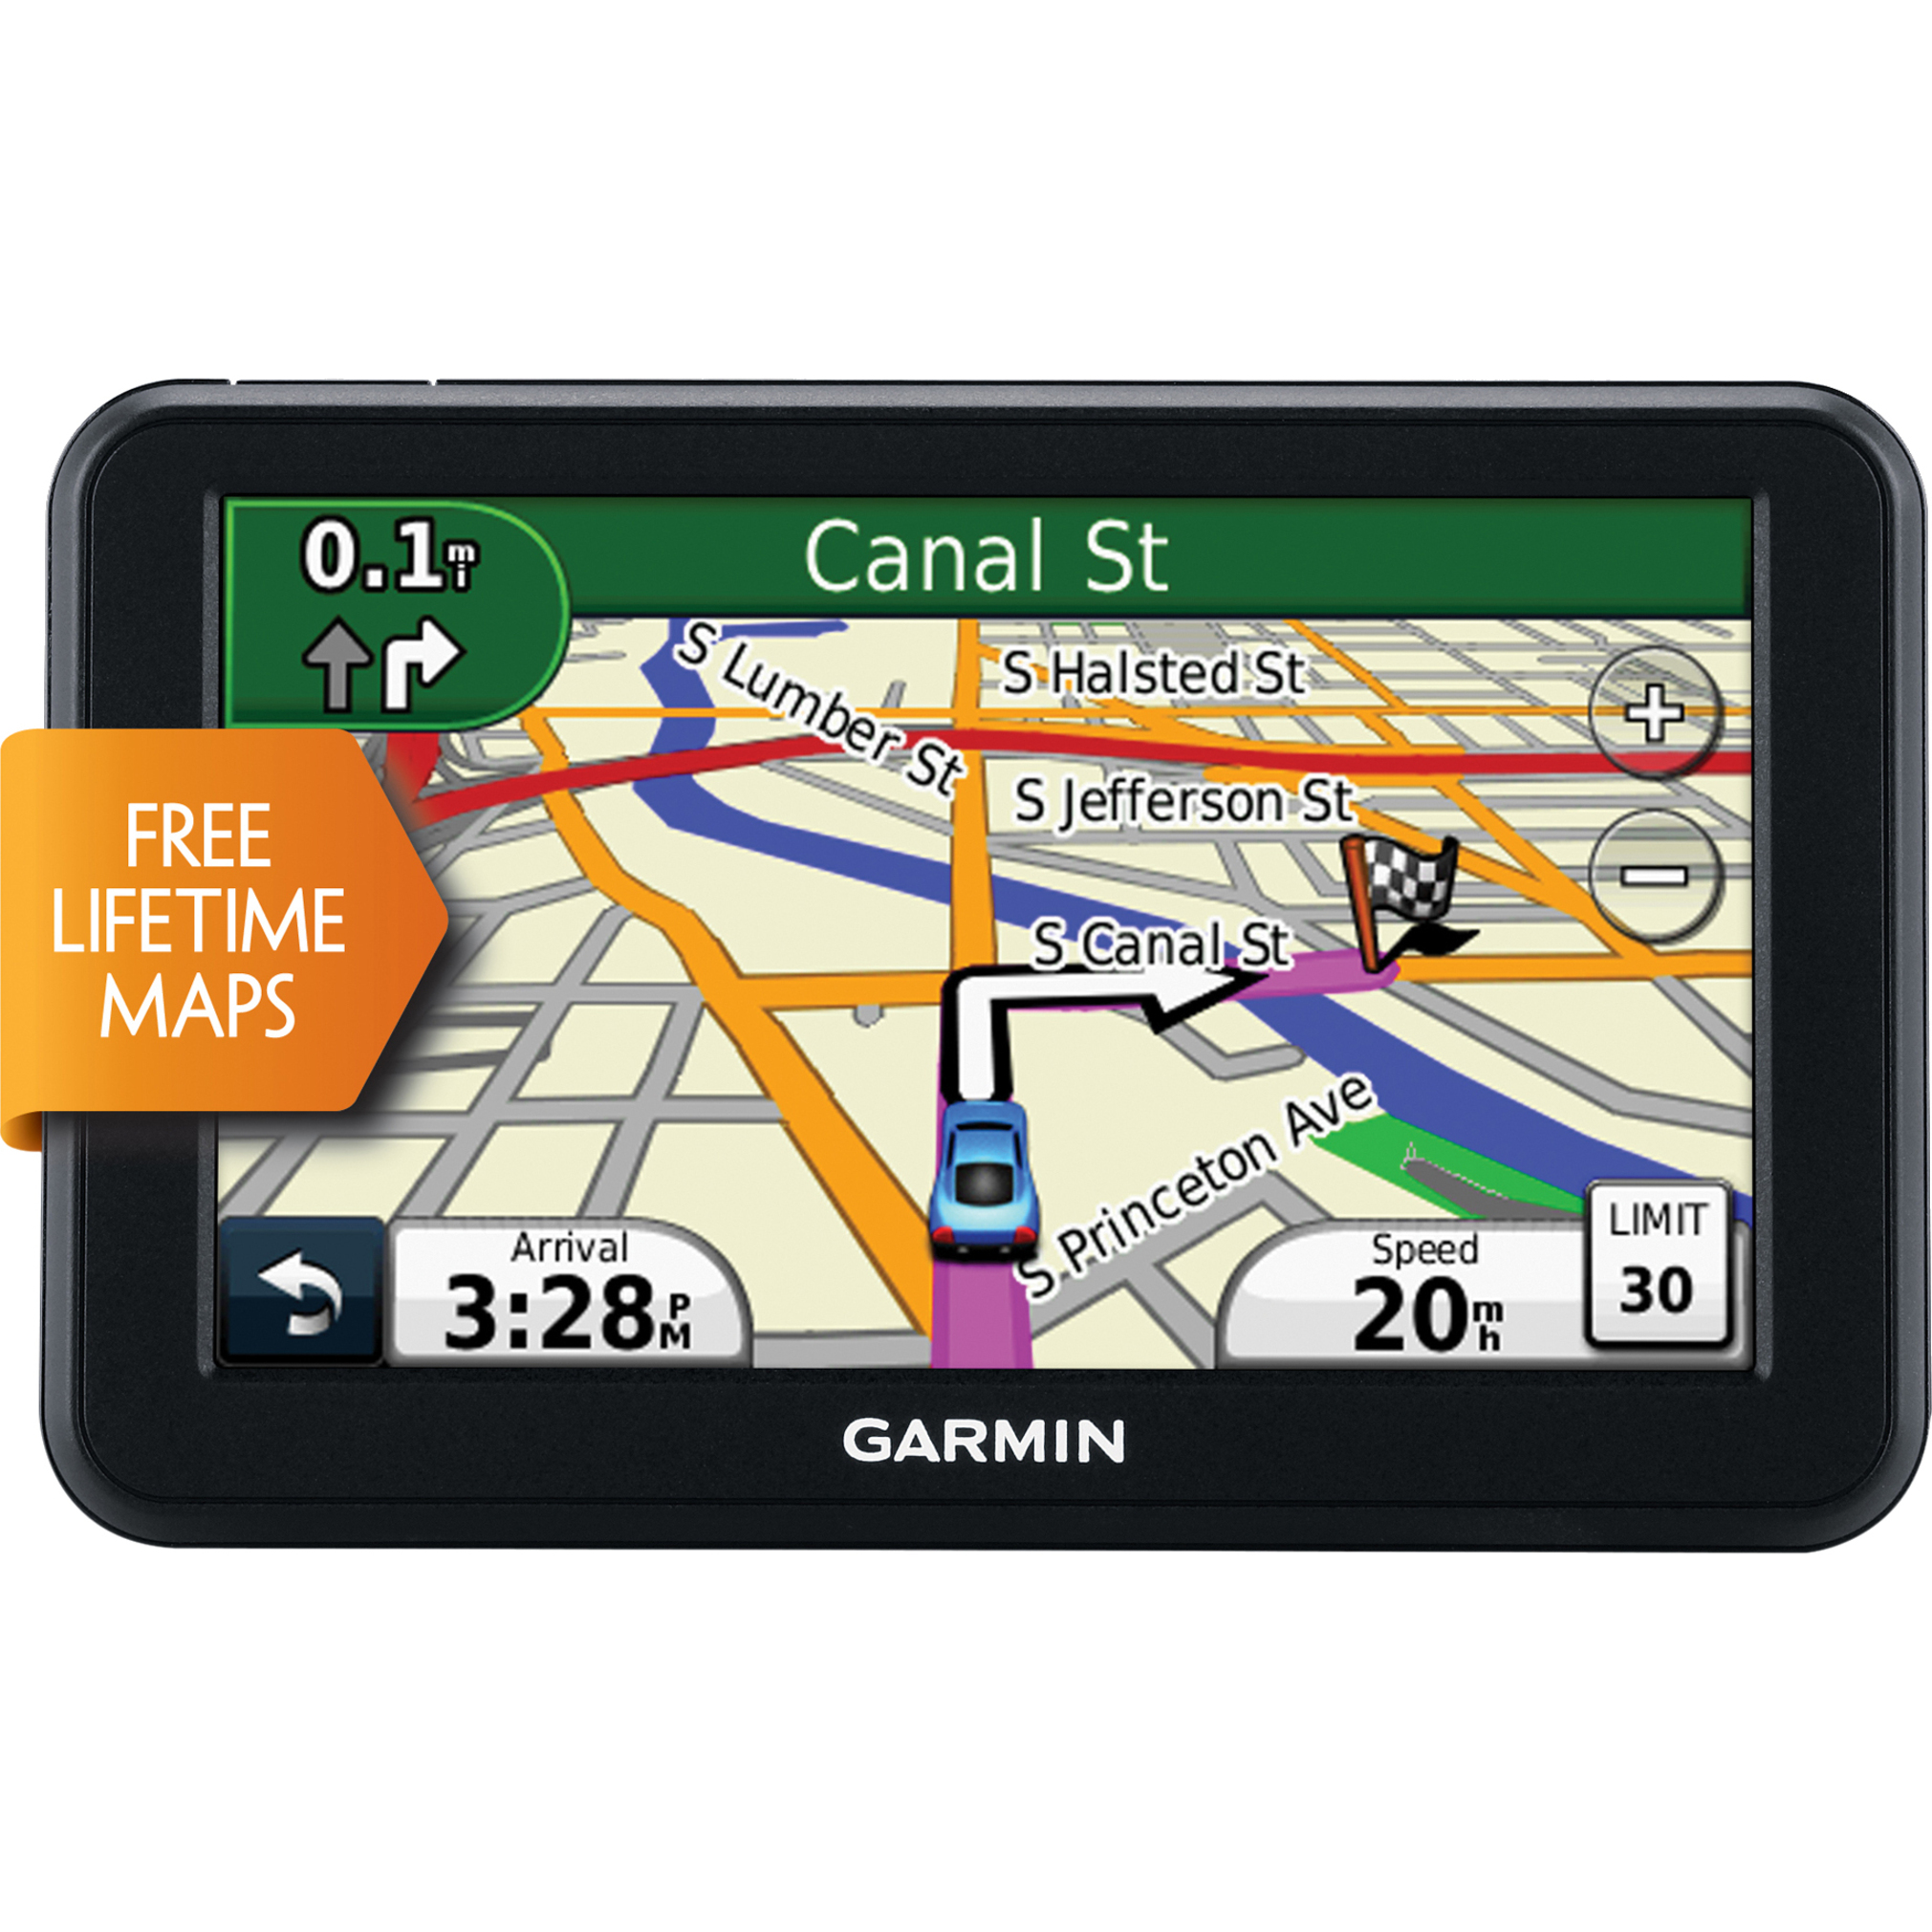 Garmin nüvi 50LM Automobile Portable GPS Navigator - image 3 of 3